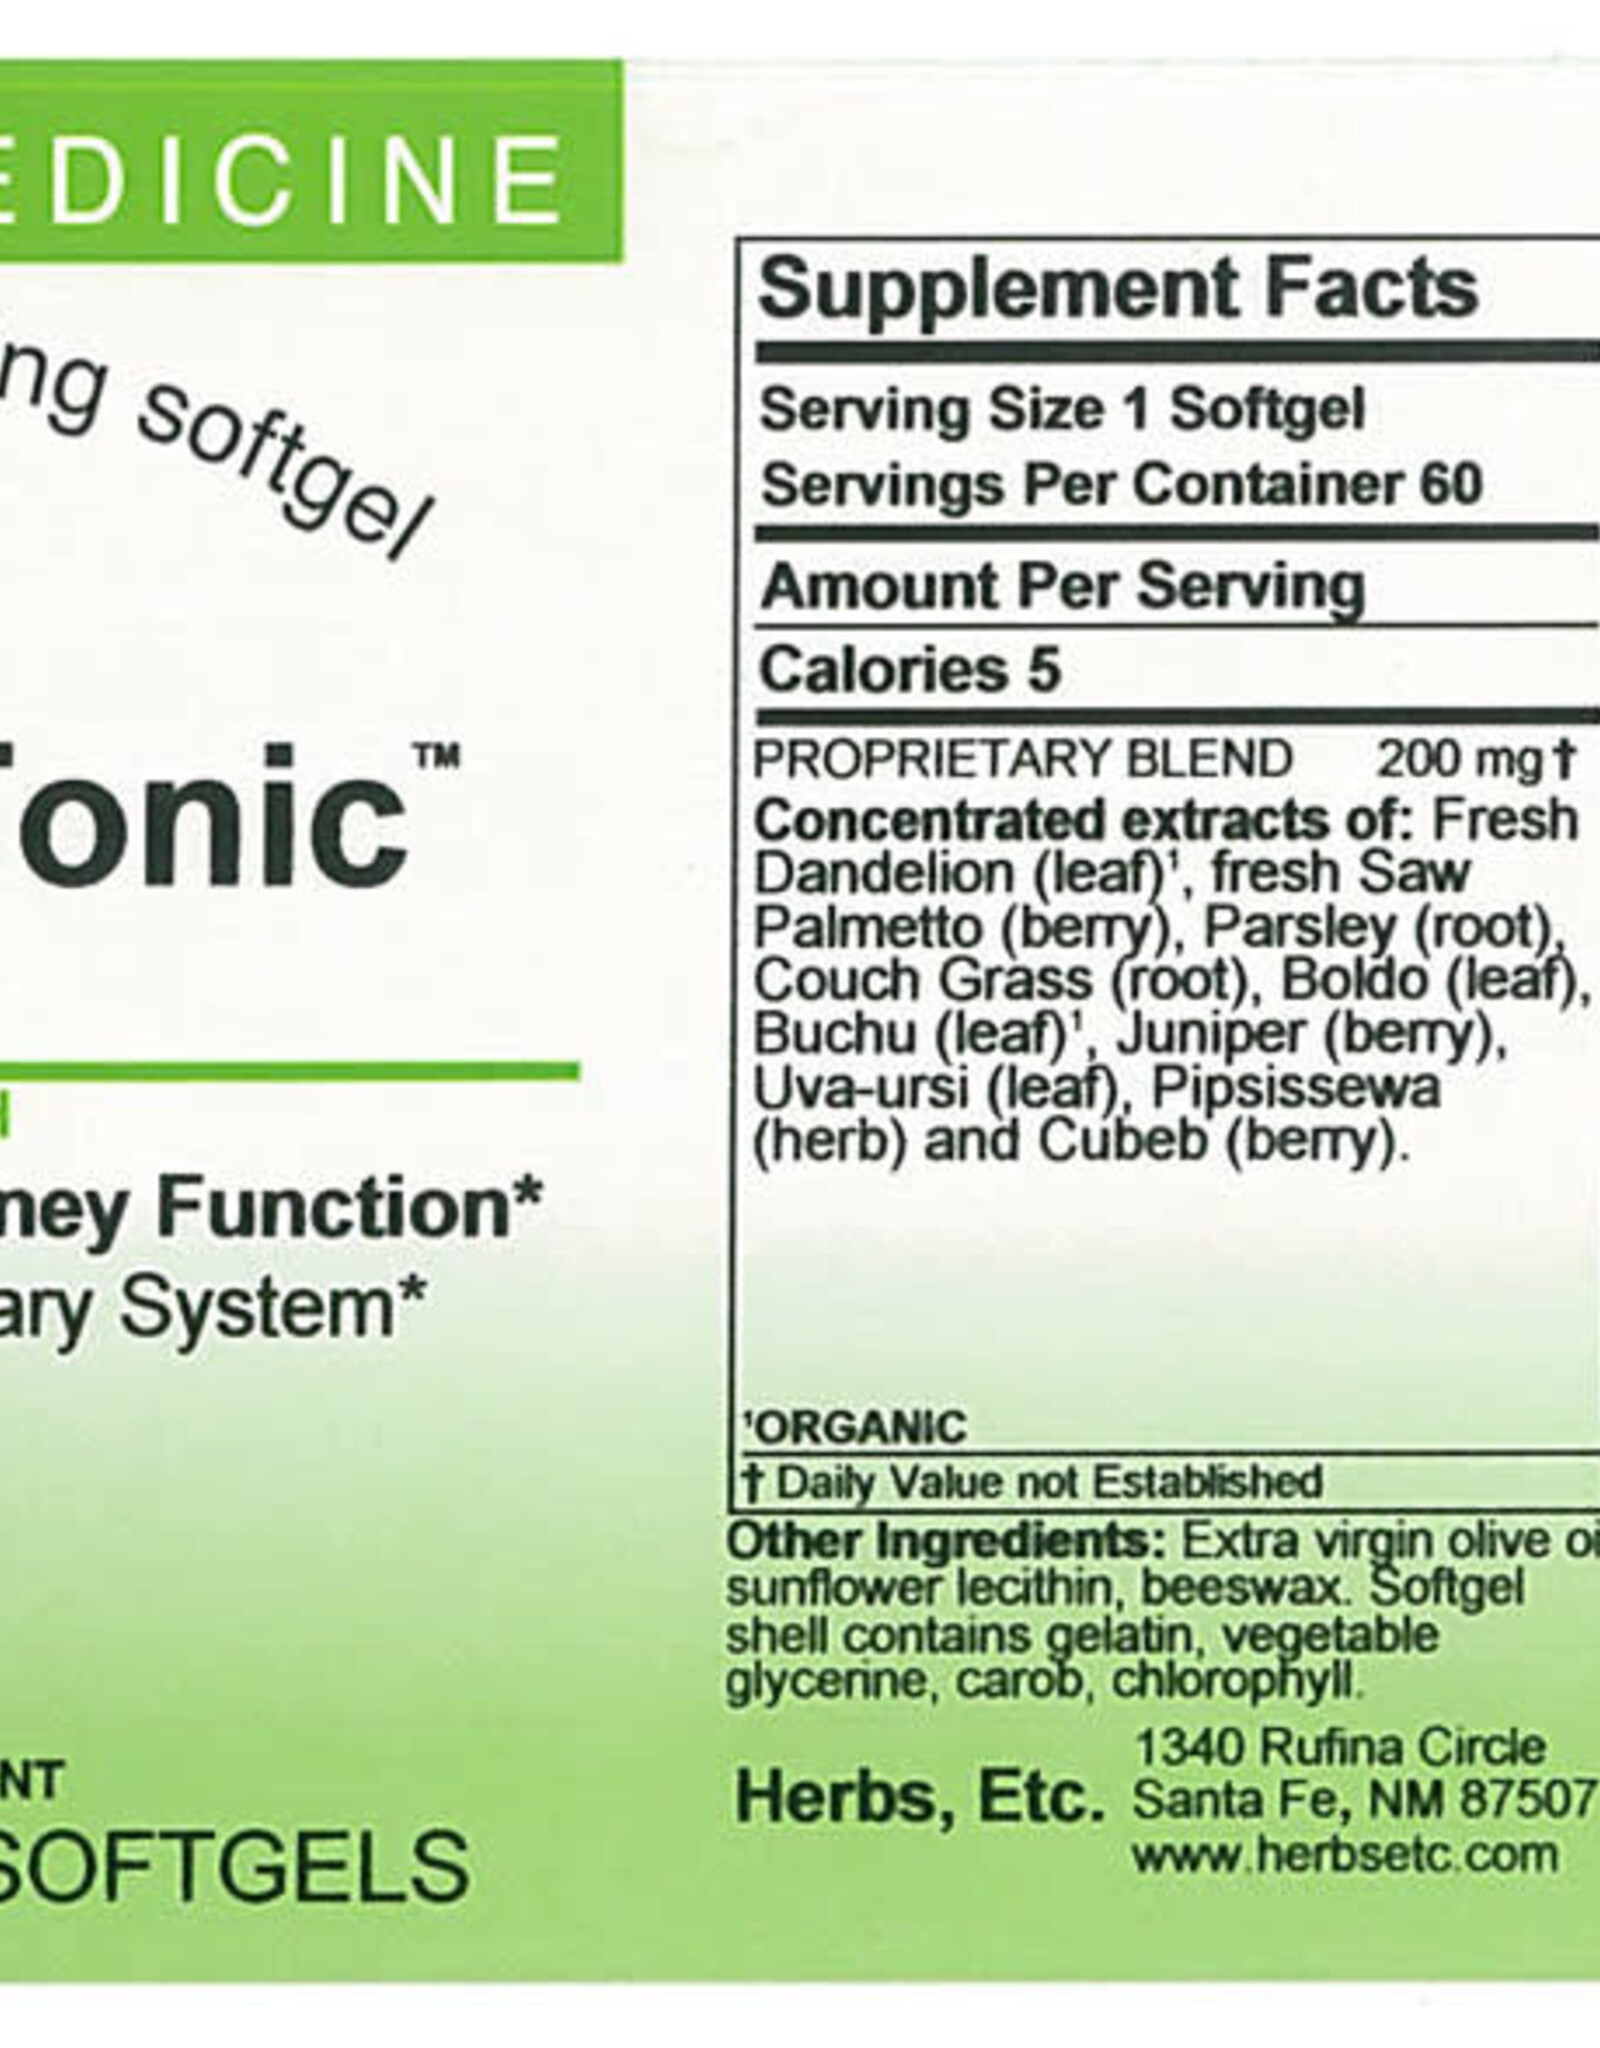 Herbs ETC Kidney Tonic-Herbs ETC